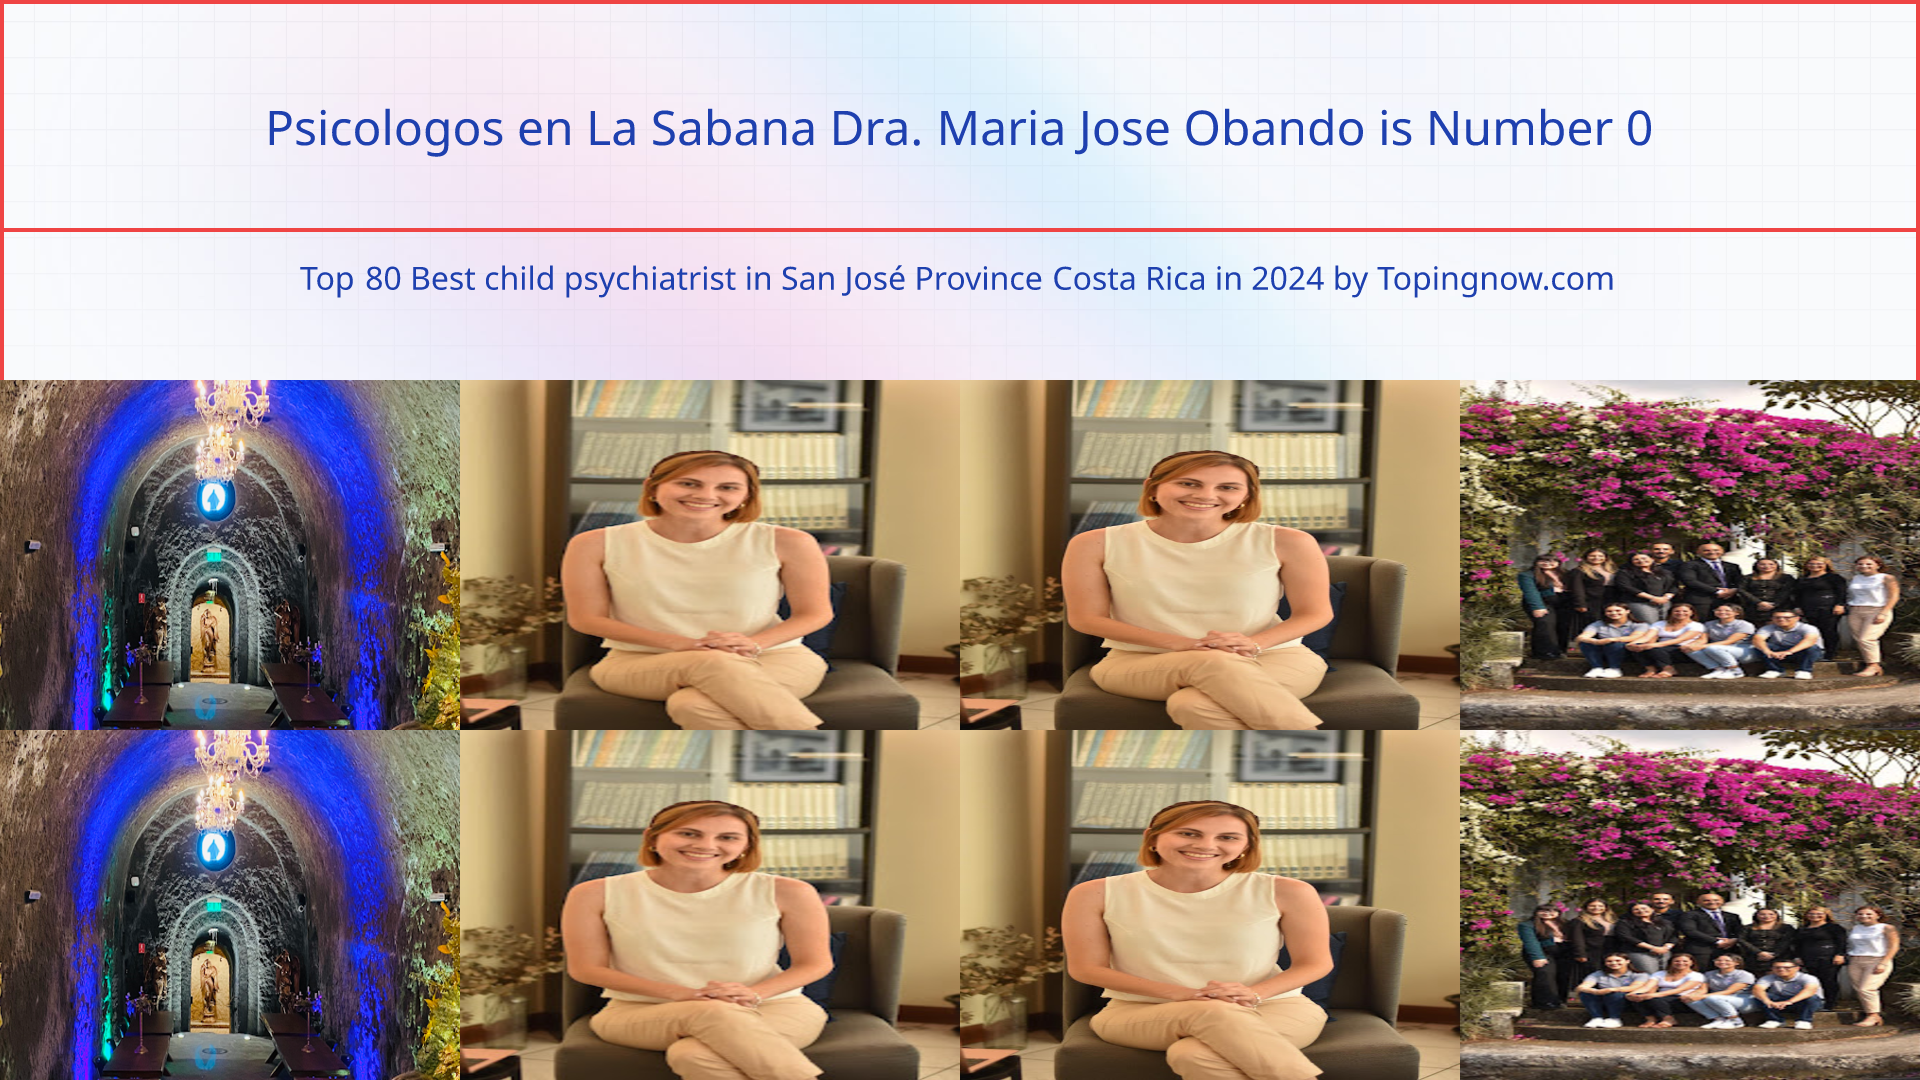 Psicologos en La Sabana Dra. Maria Jose Obando: Top 80 Best child psychiatrist in San José Province Costa Rica in 2024